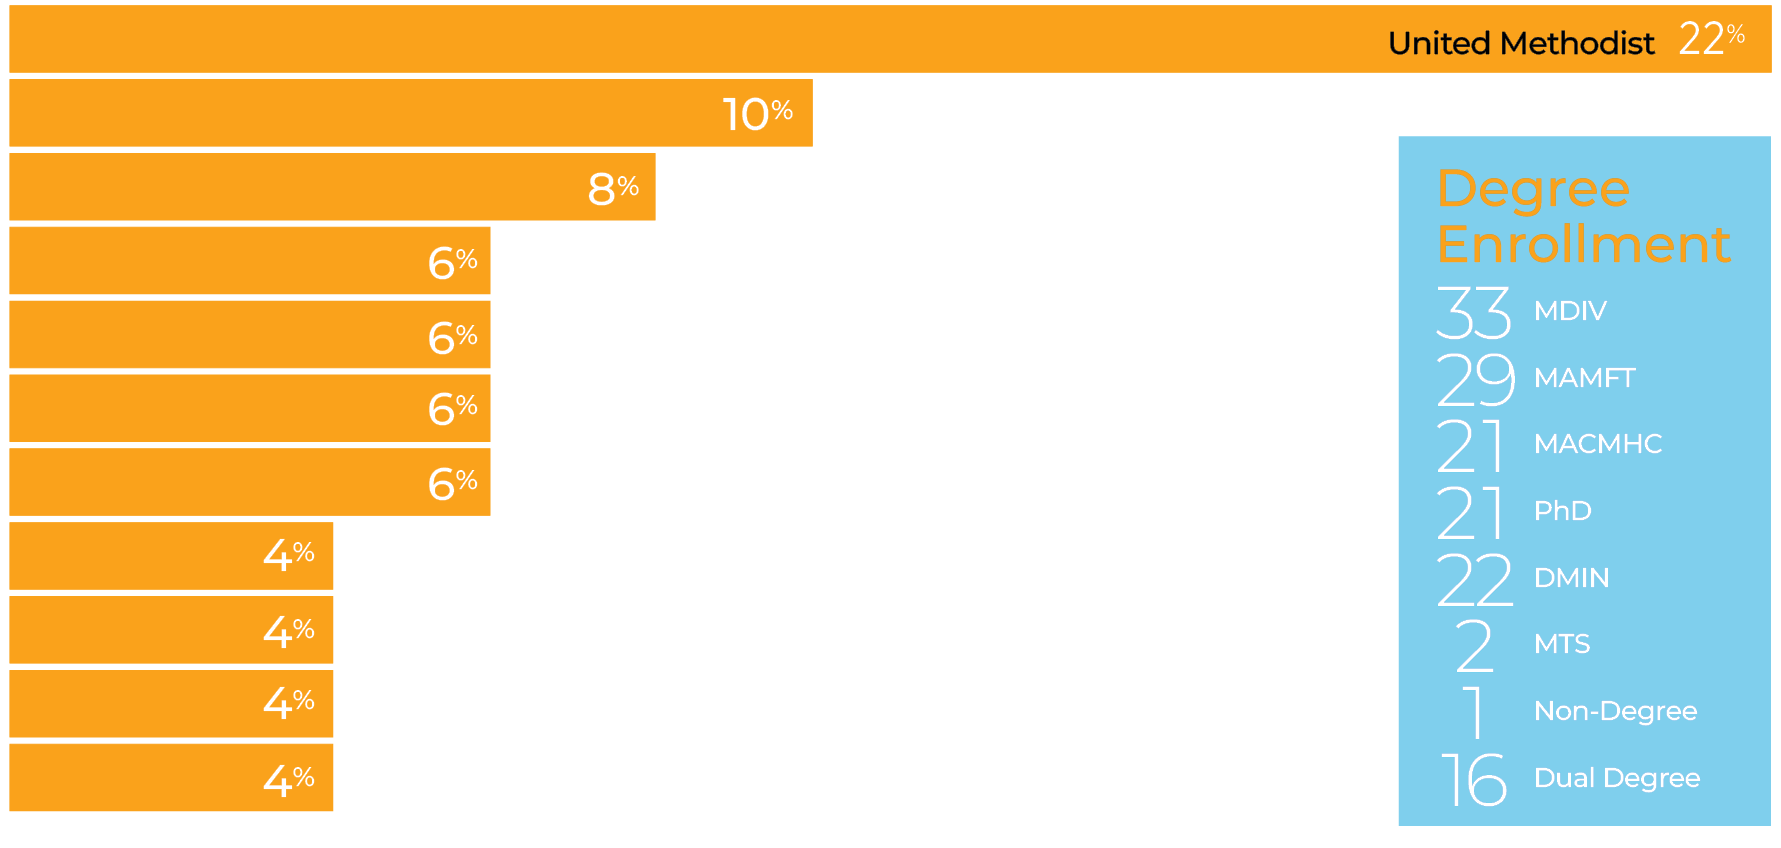 Bar Graph: United Methodist 22%, Christian Church (Disciples of Christ) 10%, Non-Denominational 8%, African Methodist Episcopal 6%, Baptist Missionary Assoc. of America 6%, Episcopal Church 6%, Evangelical Lutheran Church in America 6%, American Baptist Church 4%, Baptist (Other) 4%, Christian Church (Independent) 4%, United Church of Christ 4%. Side Bar - Degree Enrollment: 33 MDIV, 29 MAMFT, 21 MACMHC, 21 PhD, 22 DMIN, 2 MTS, 1 Non-Degree, 16 Dual Degree